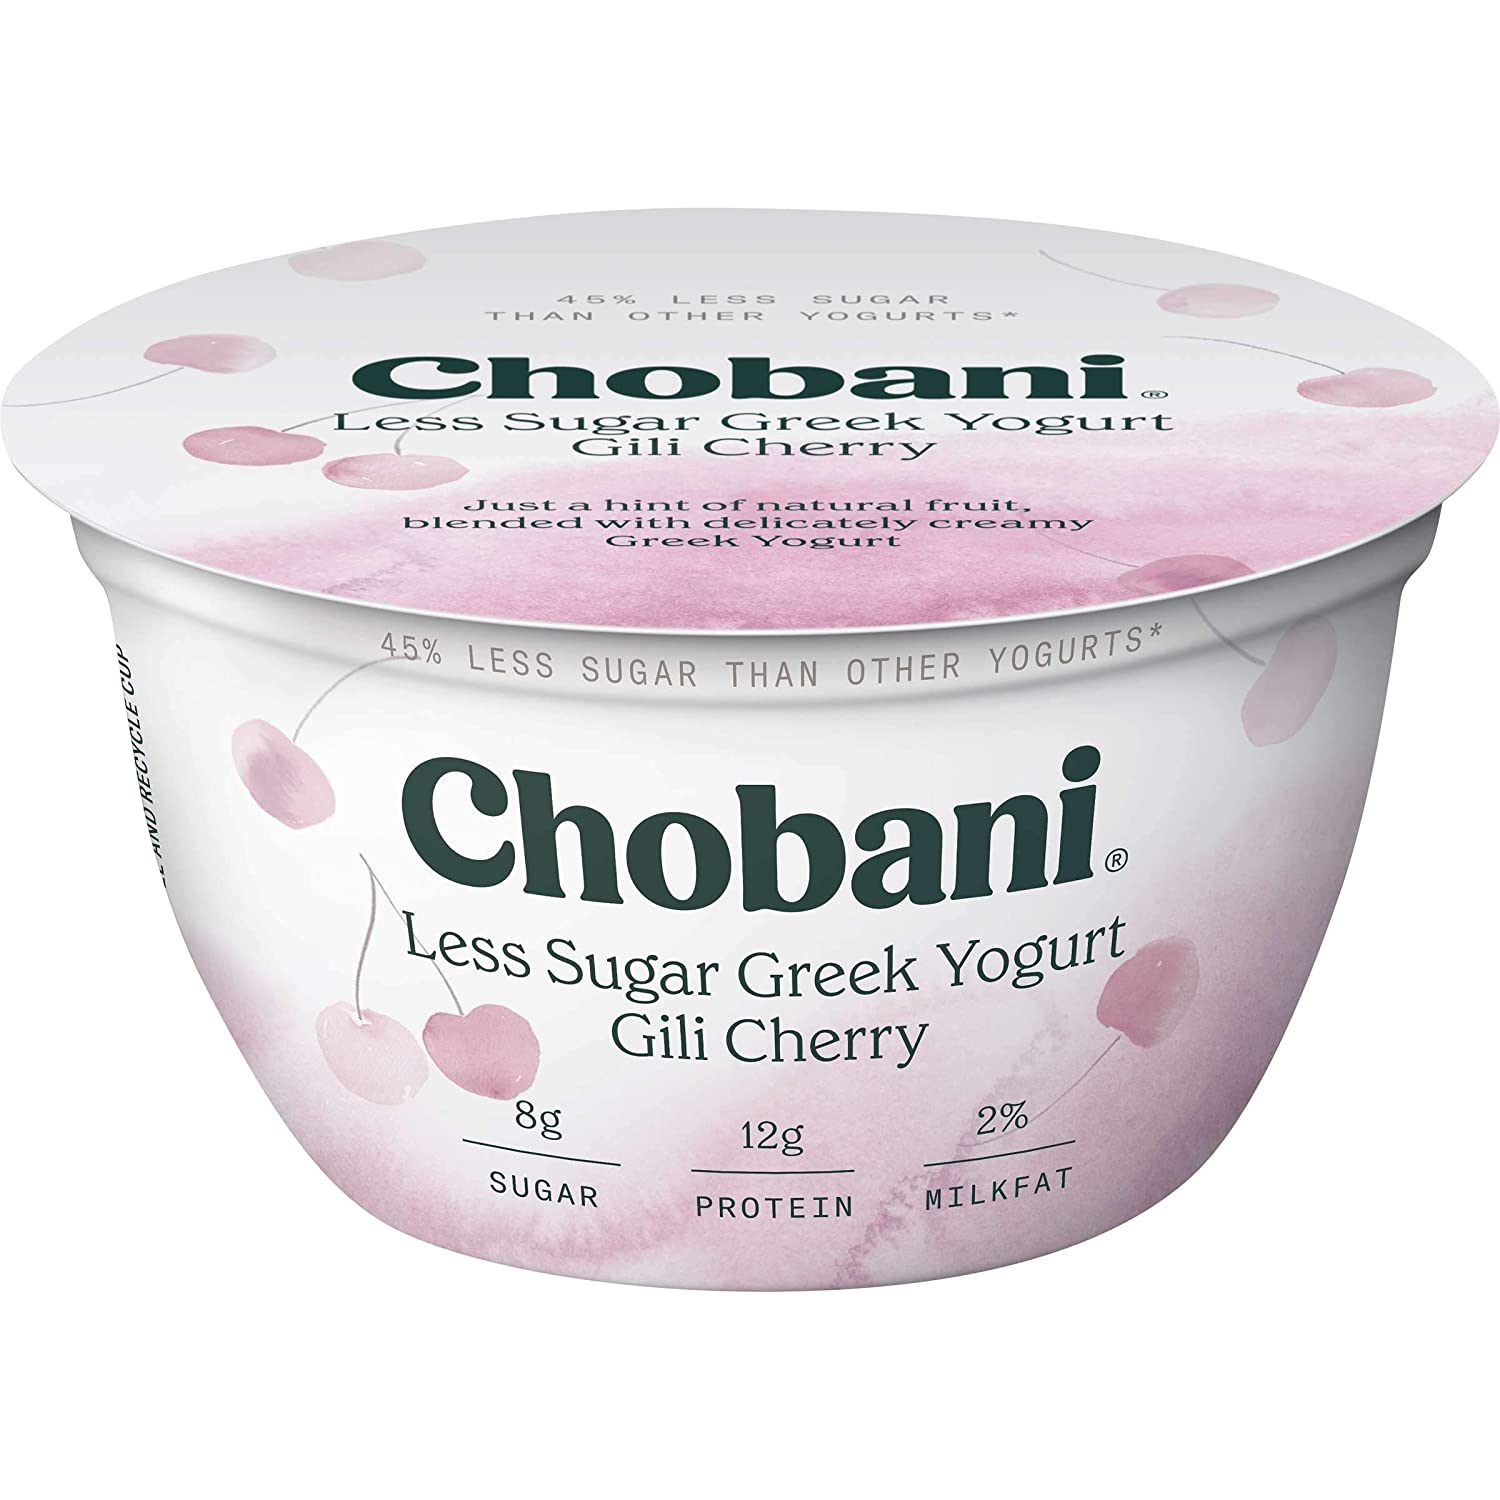 Chobani Less Sugar, Gili Cherry